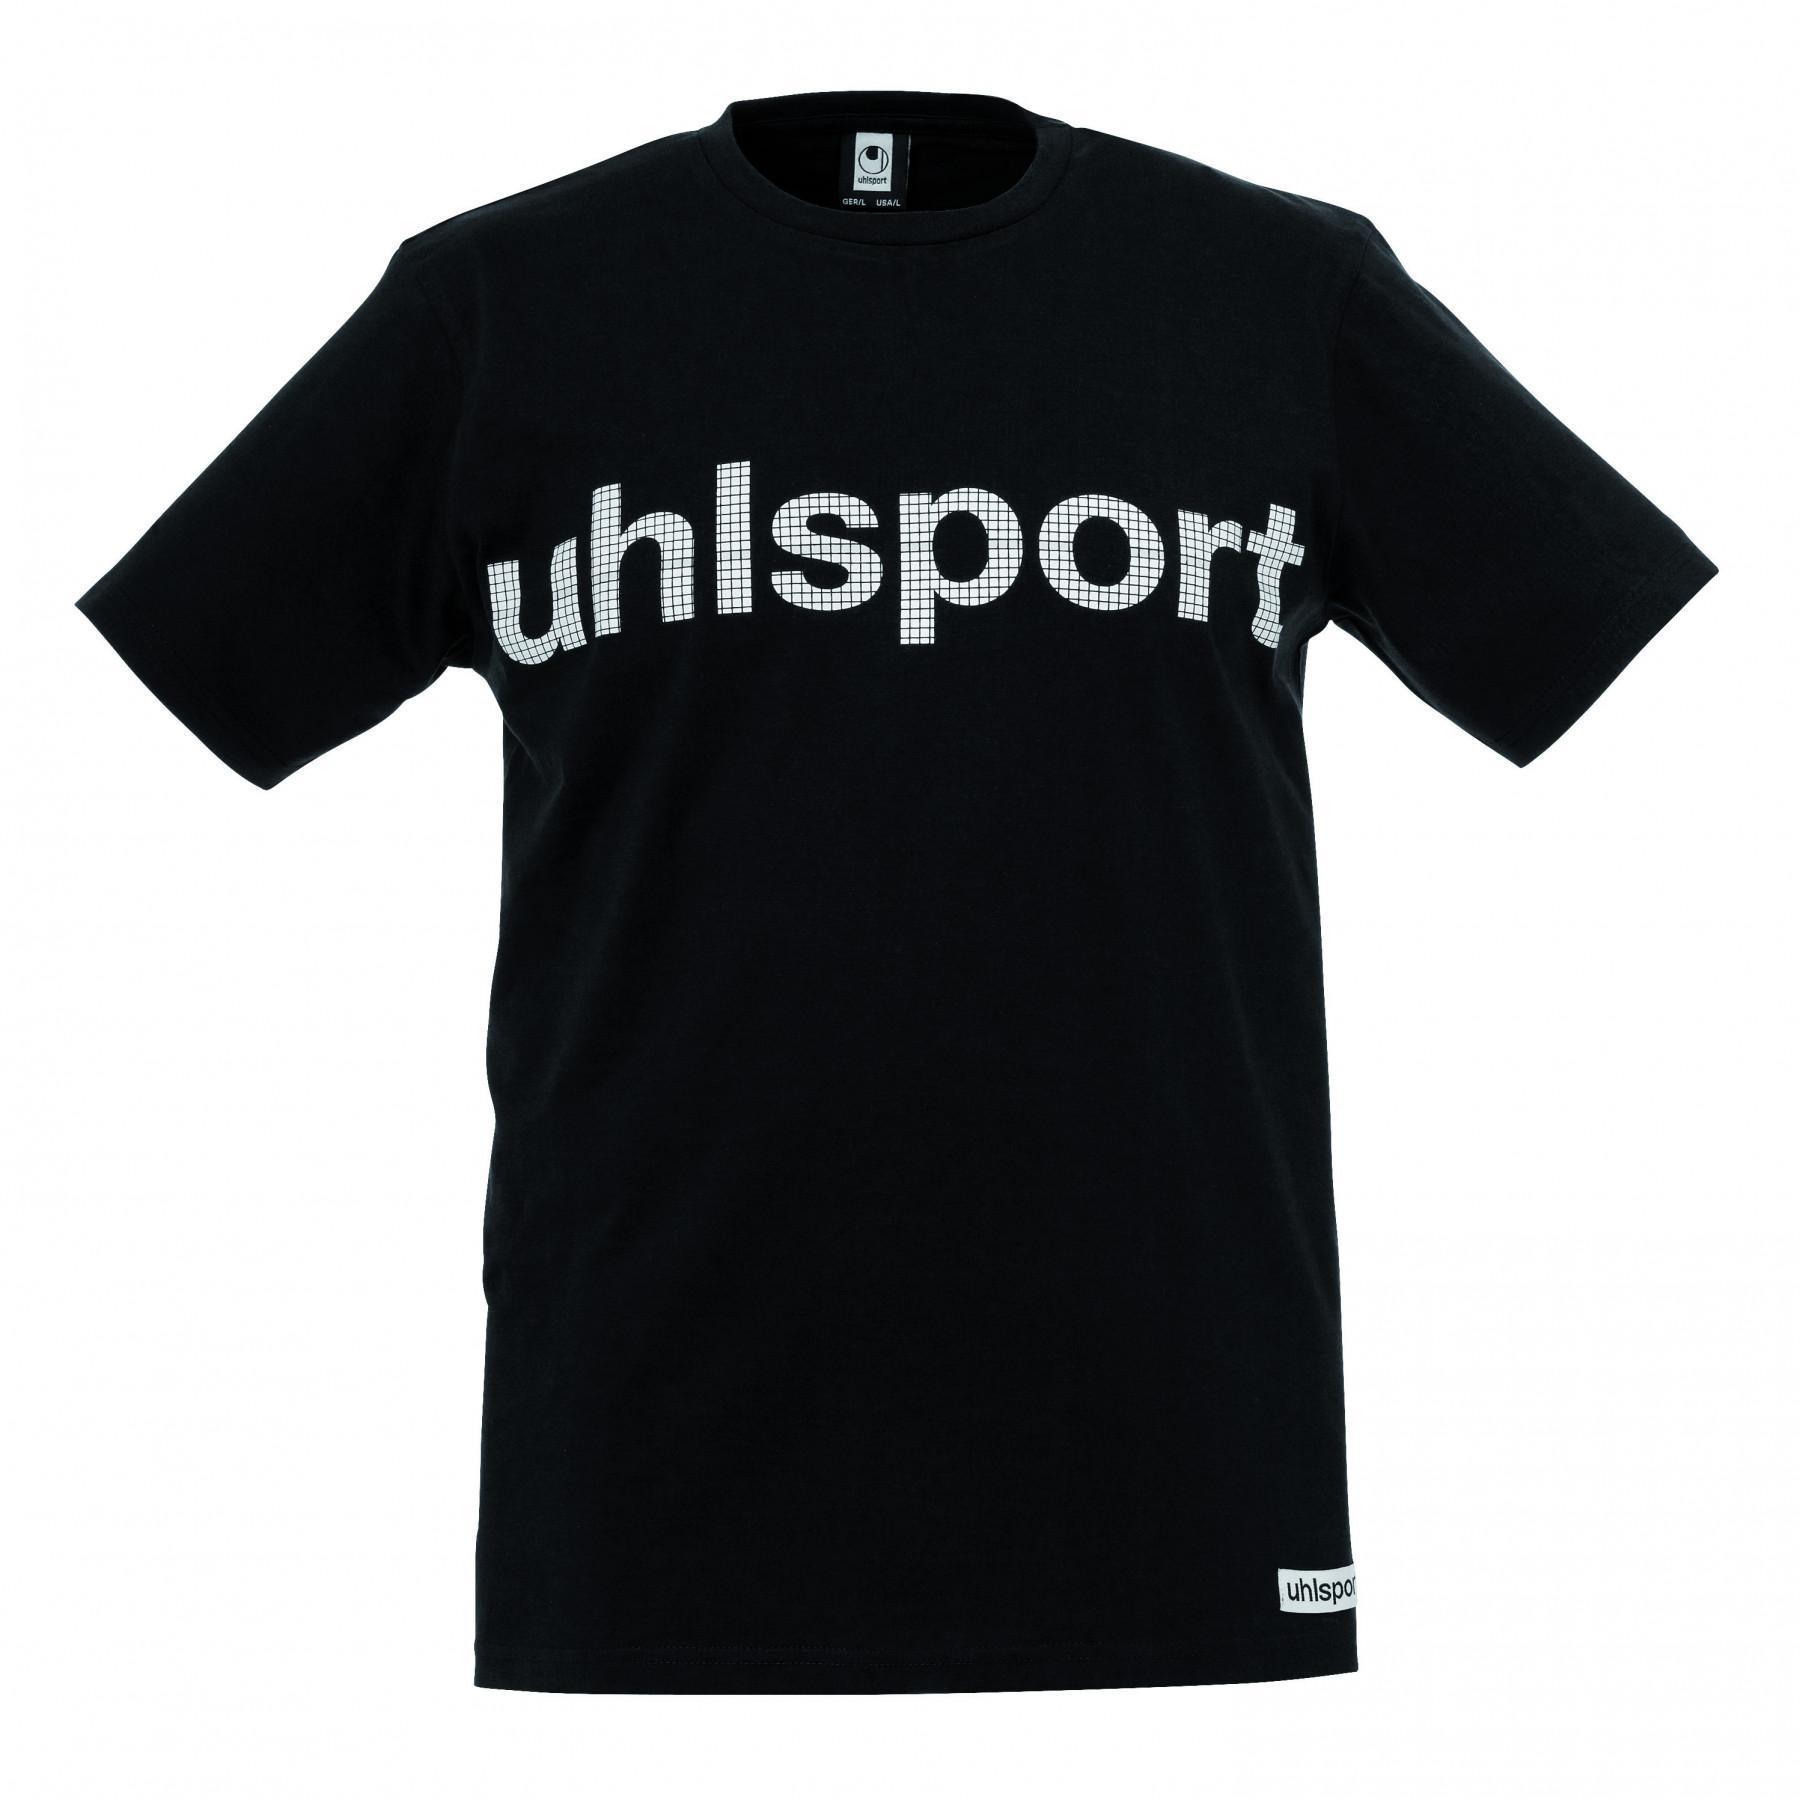 Promotioneel T-shirt Uhlsport Essential